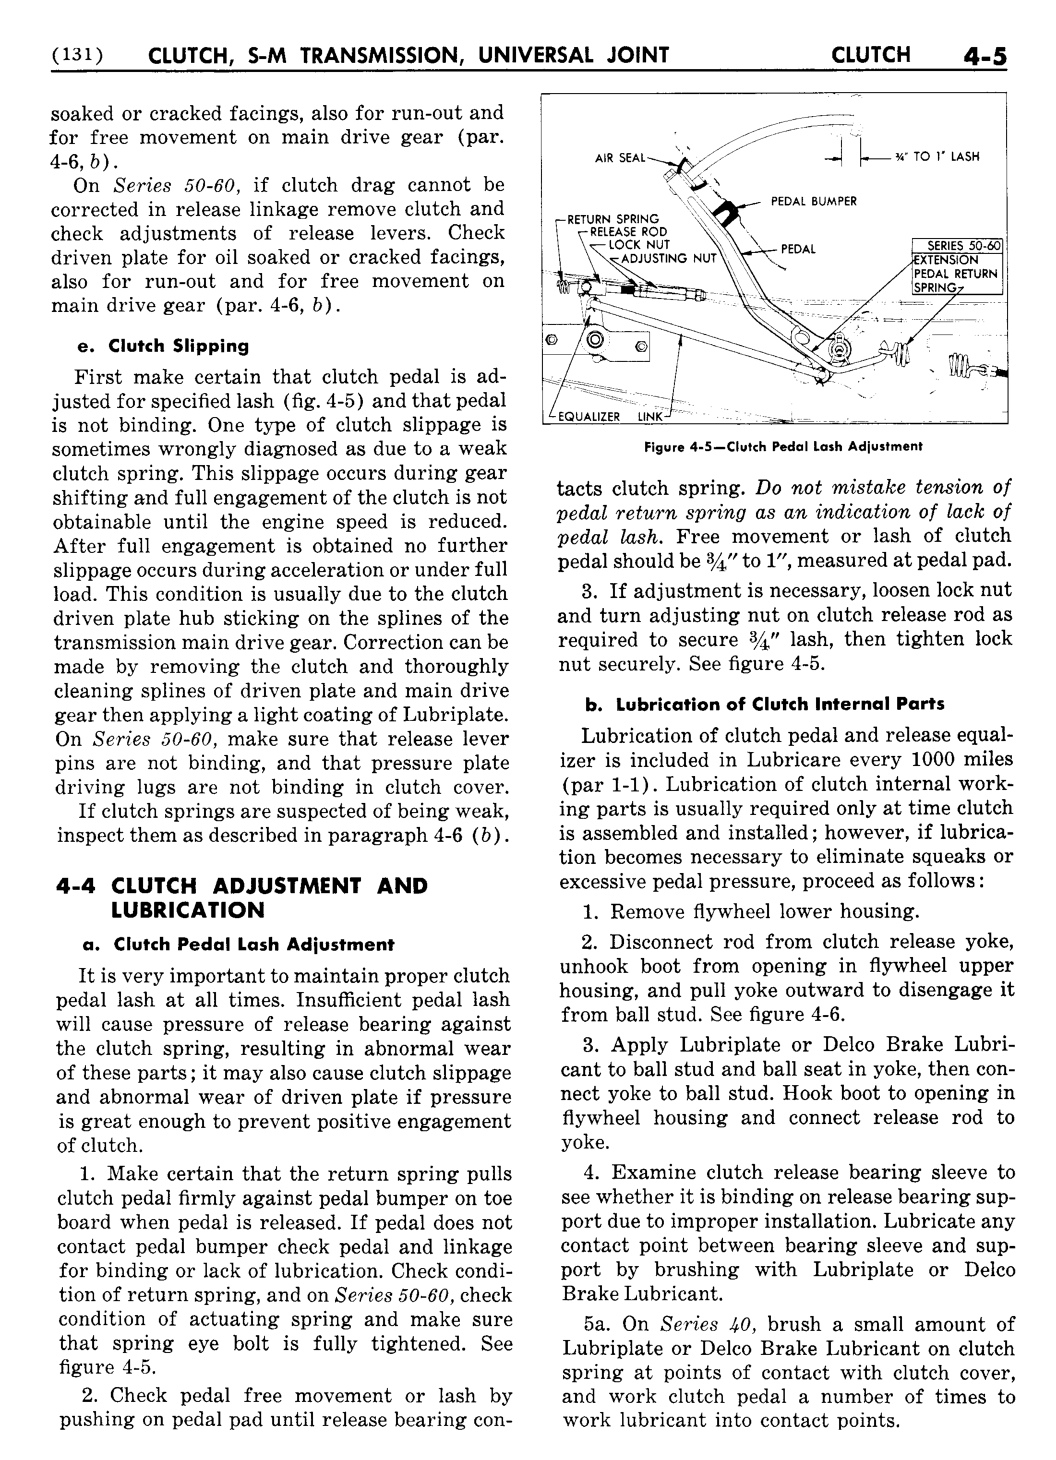 n_05 1954 Buick Shop Manual - Clutch & Trans-005-005.jpg